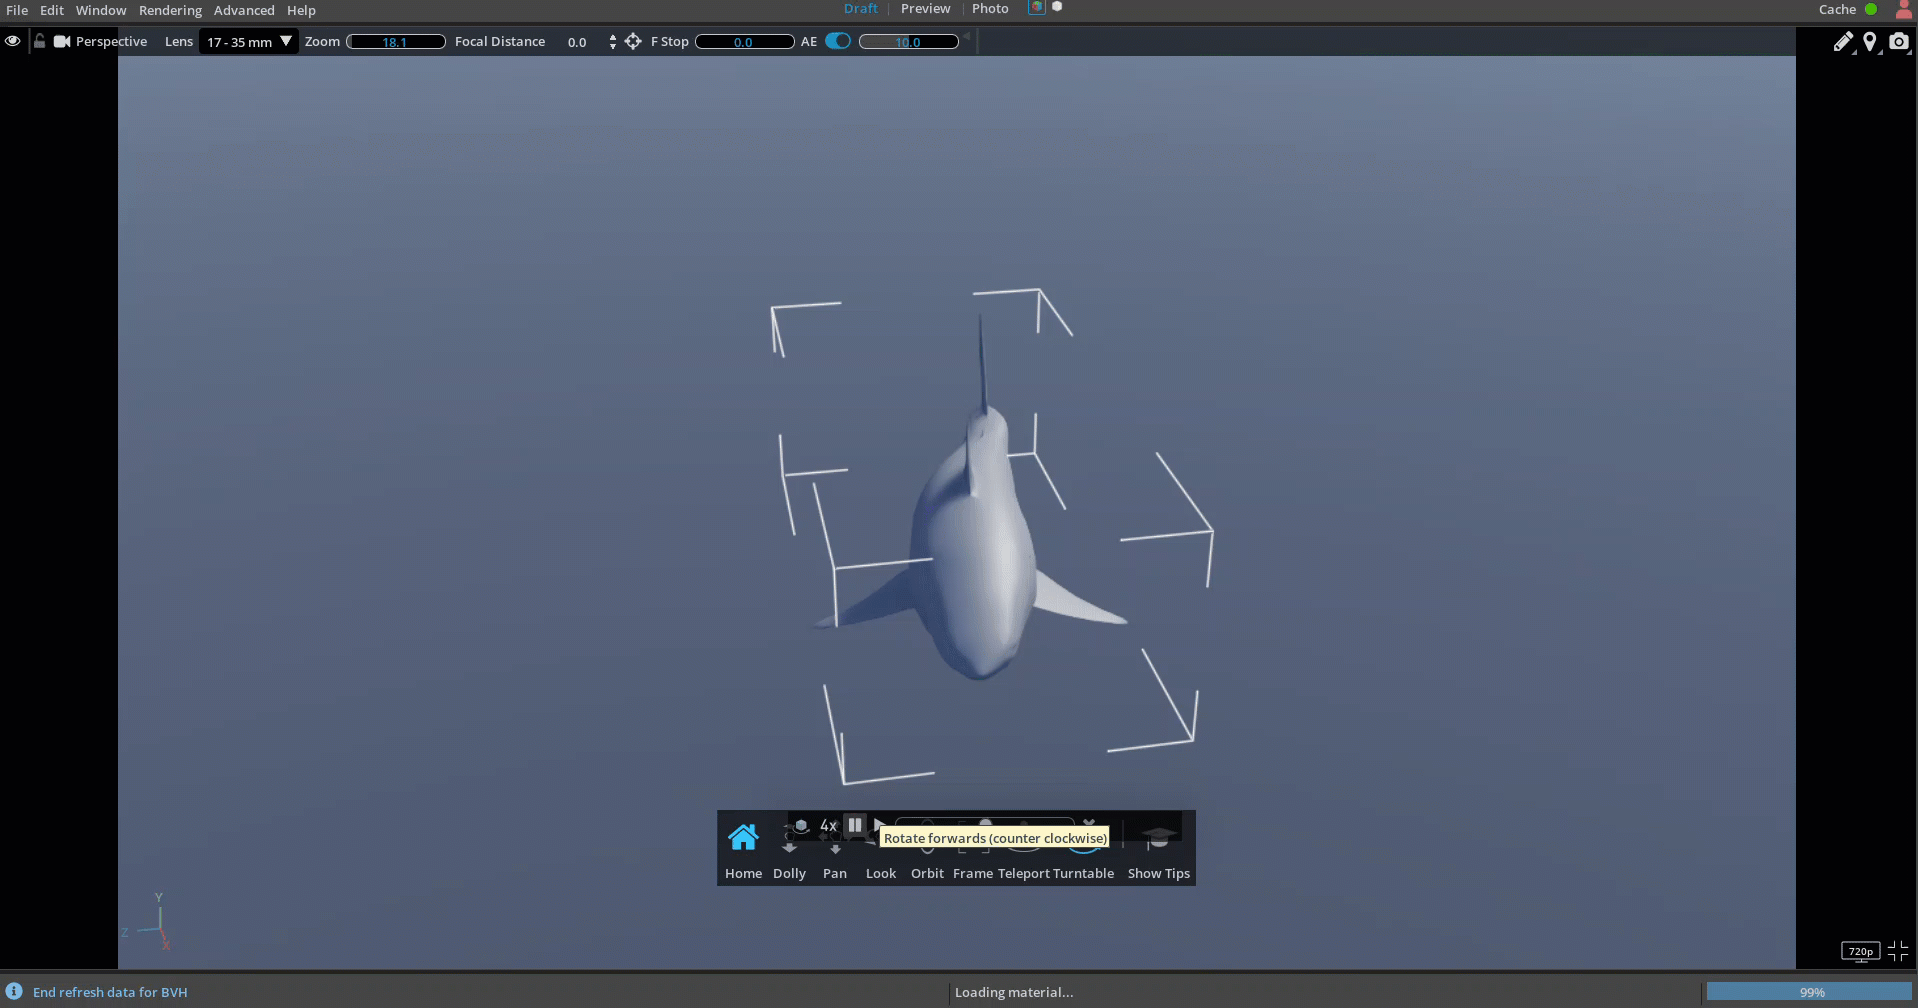 Shark model on the Turntable